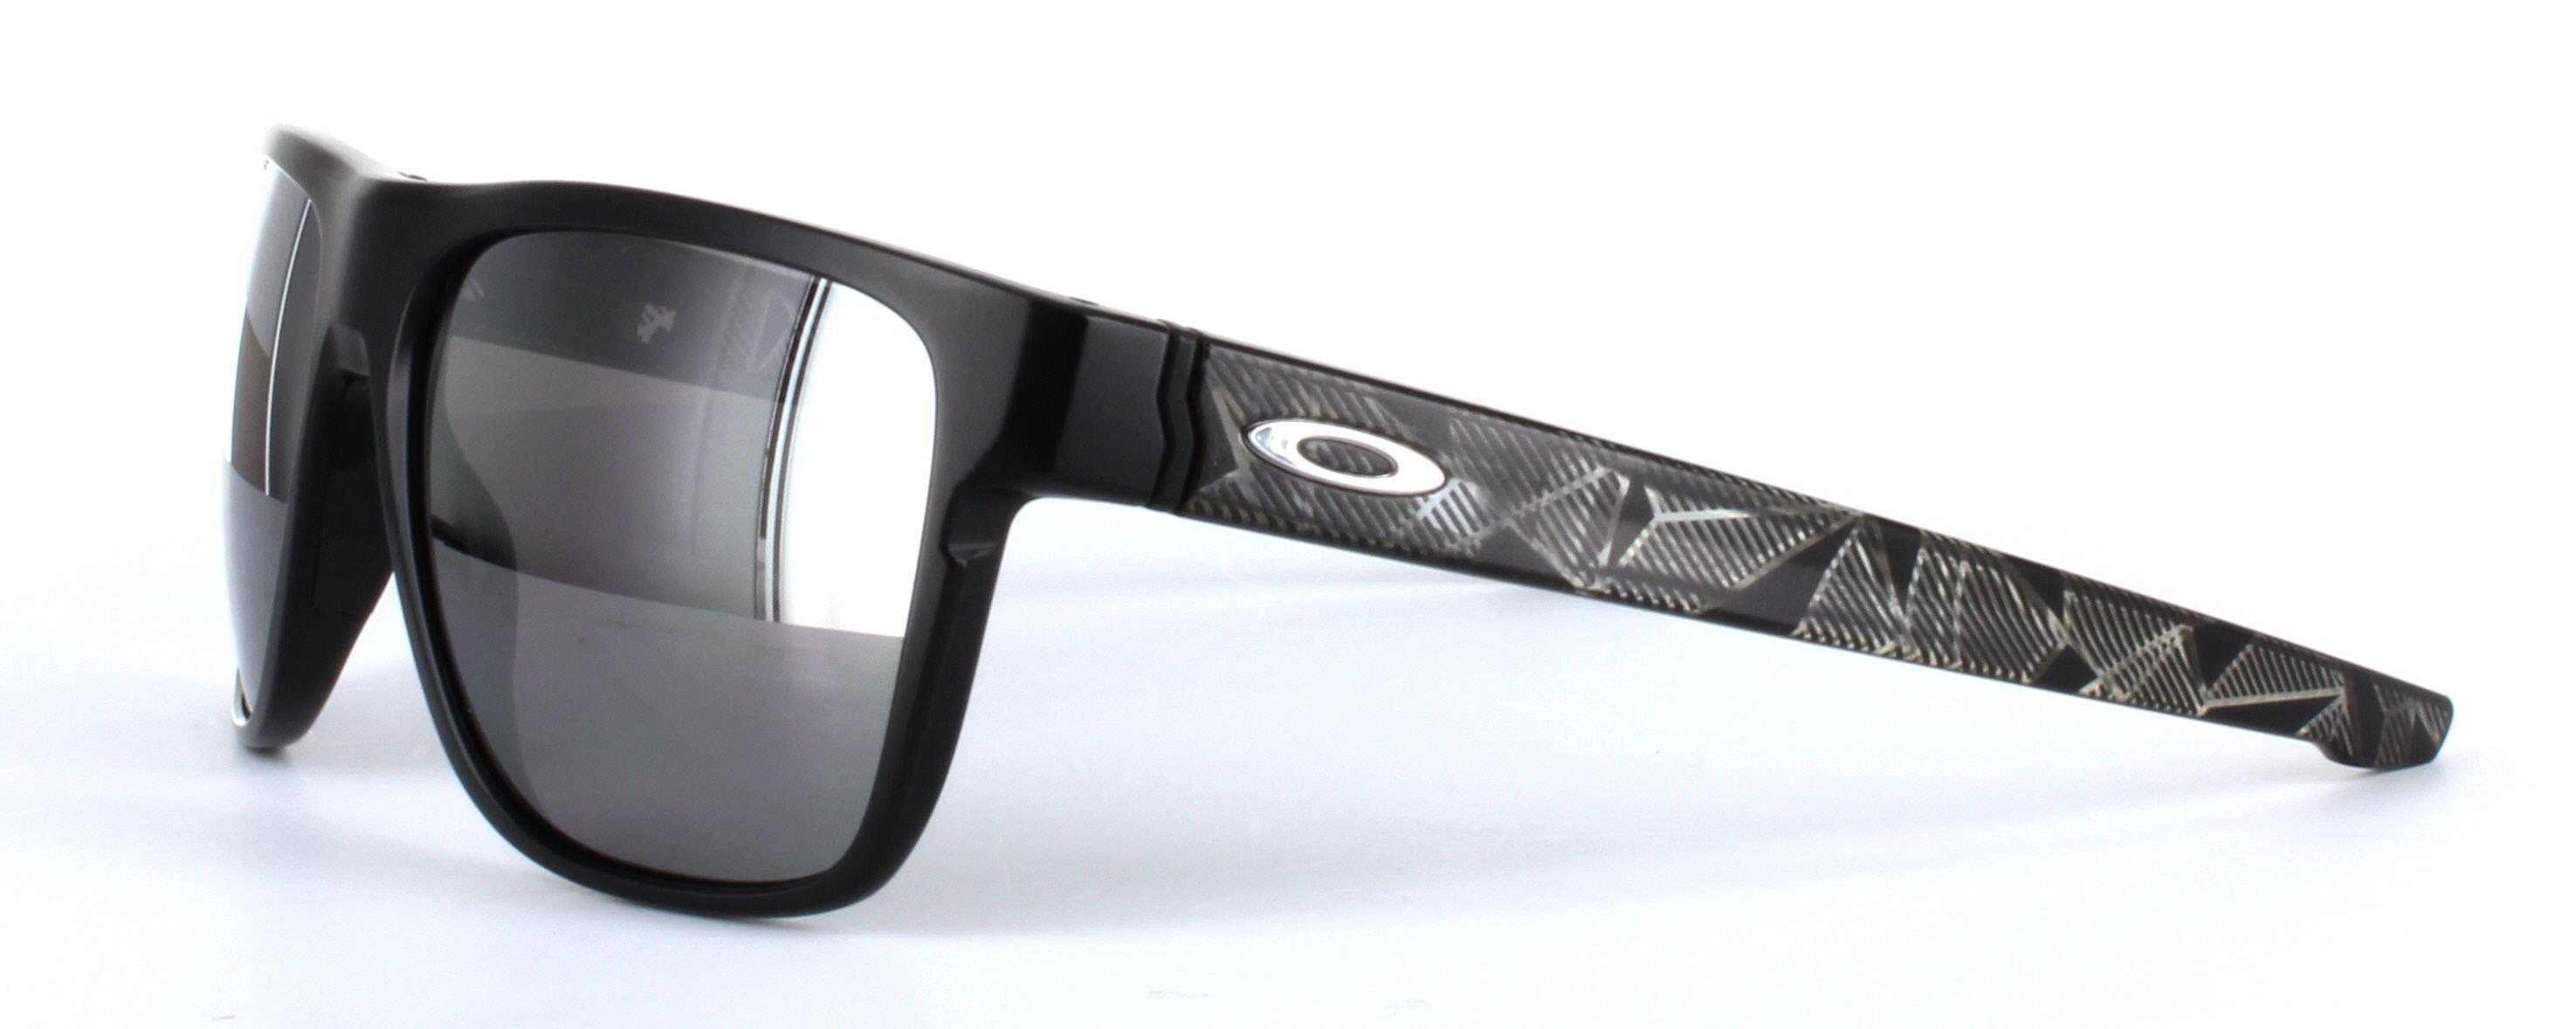 Oakley Sunglasses in Black | Cheap Glasses Online | Glasses2You